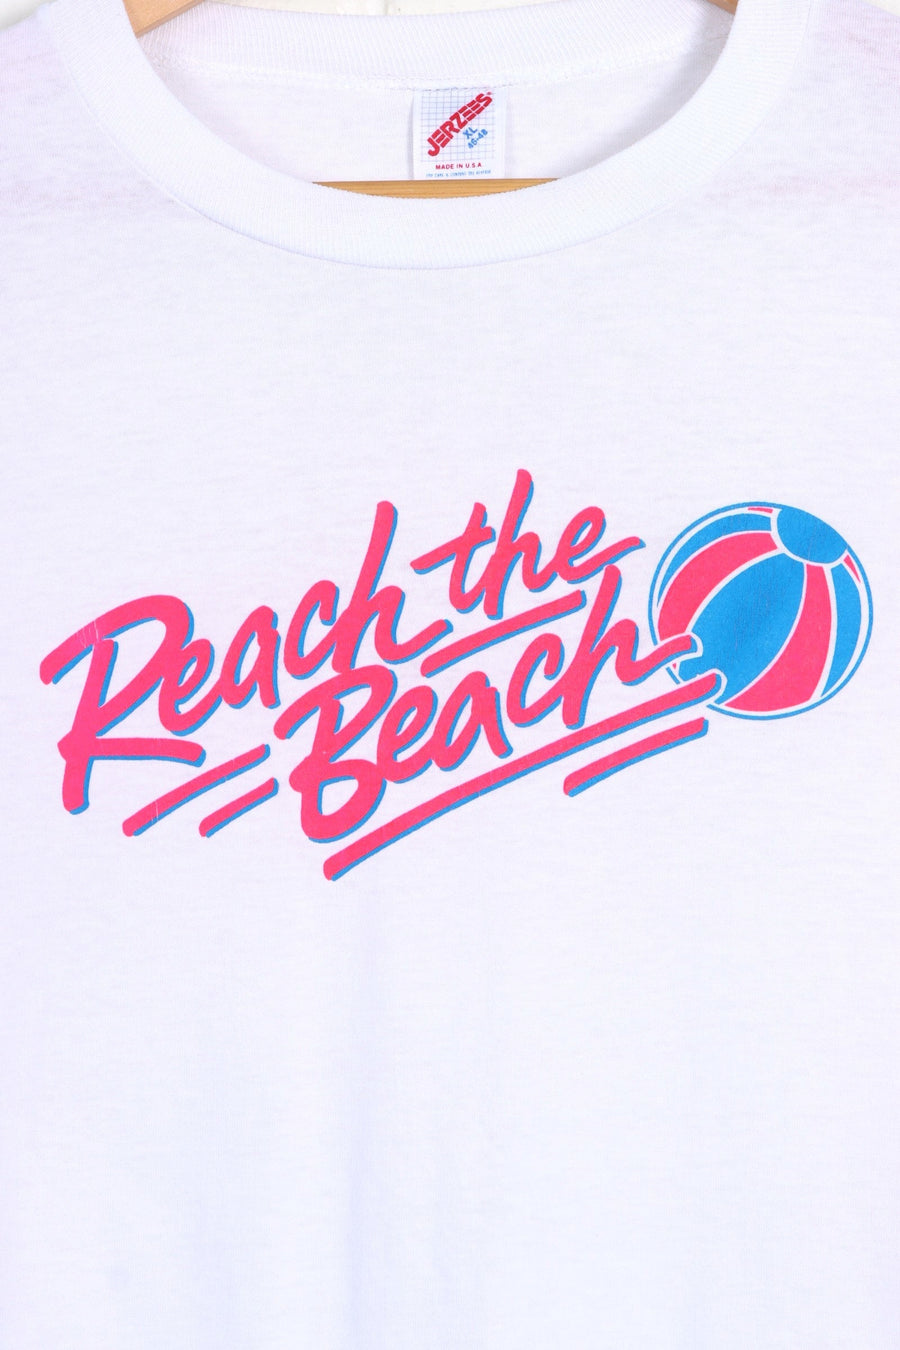 Neon Pink "Reach the Beach" Single Stitch T-Shirt USA Made (L)